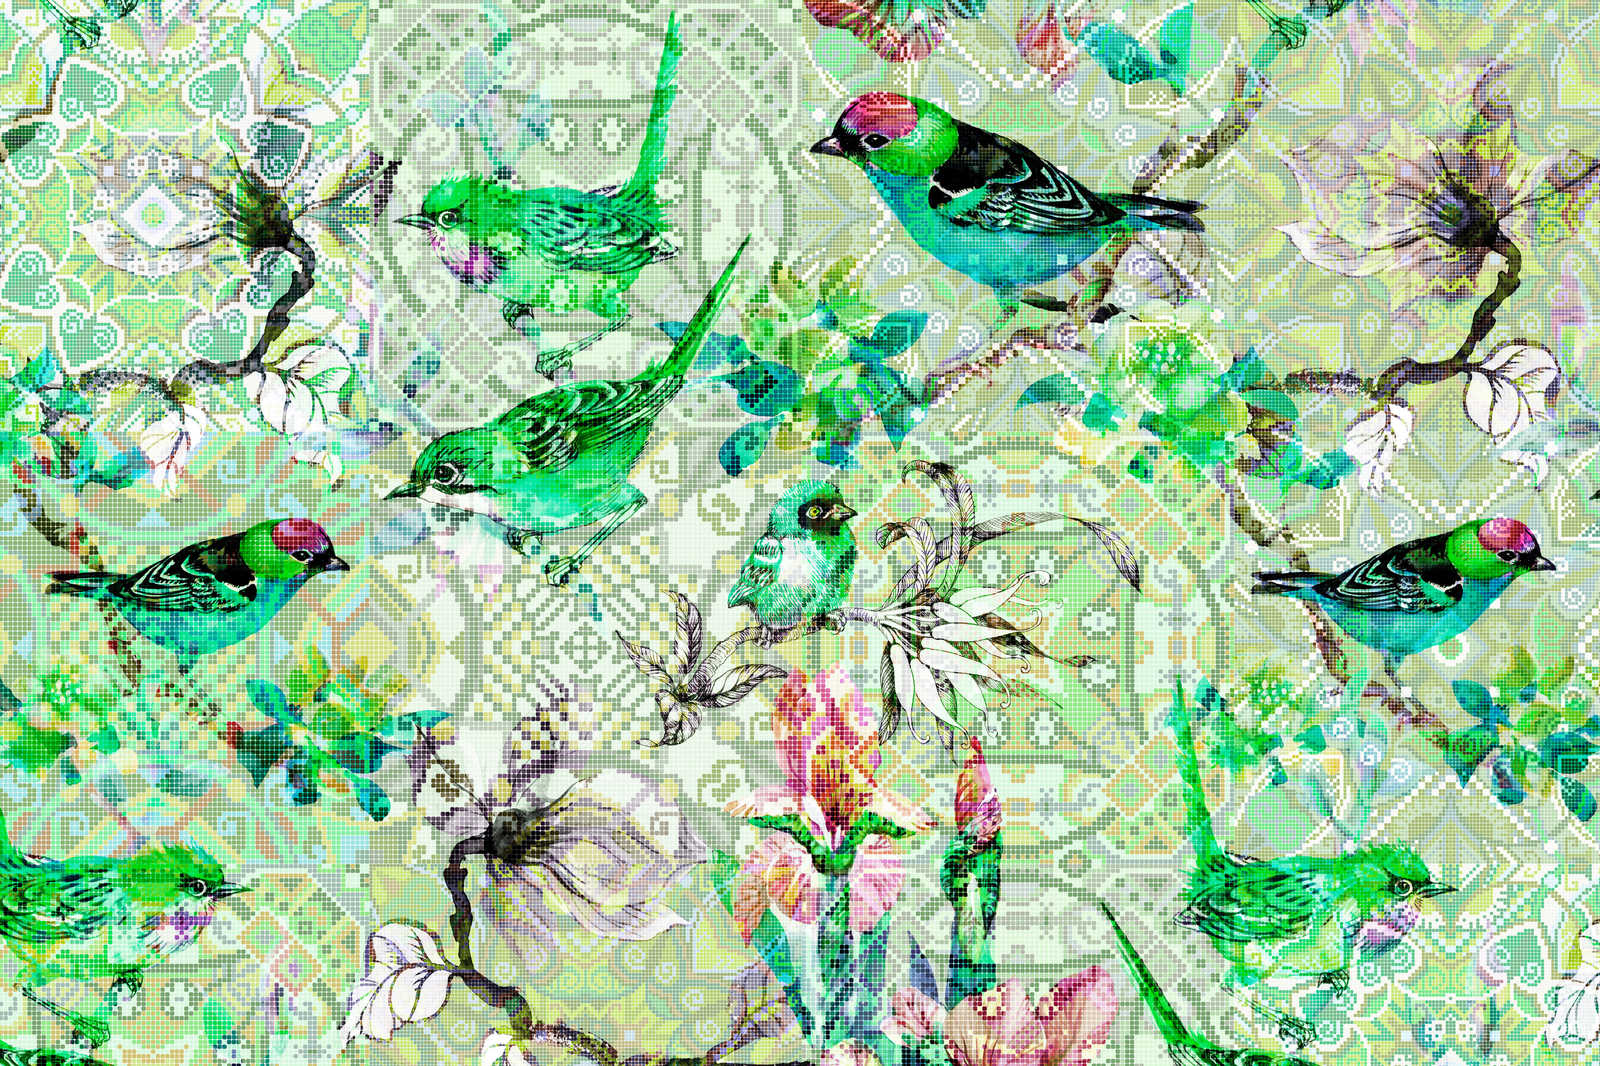             Pintura en lienzo Pájaro verde con motivo de mosaico - 0,90 m x 0,60 m
        